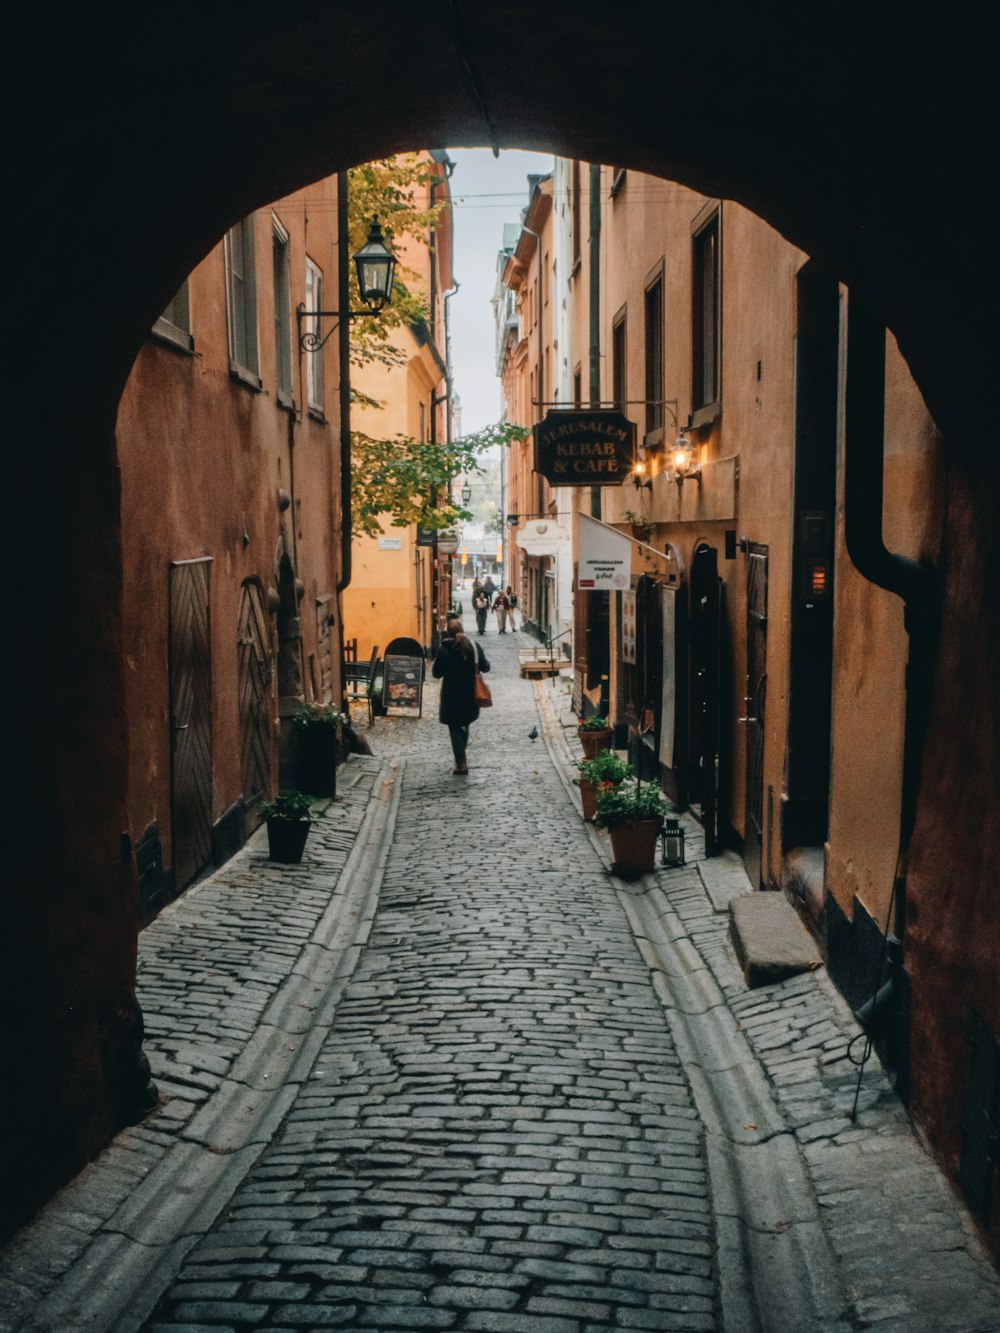 a person walking down a narrow street